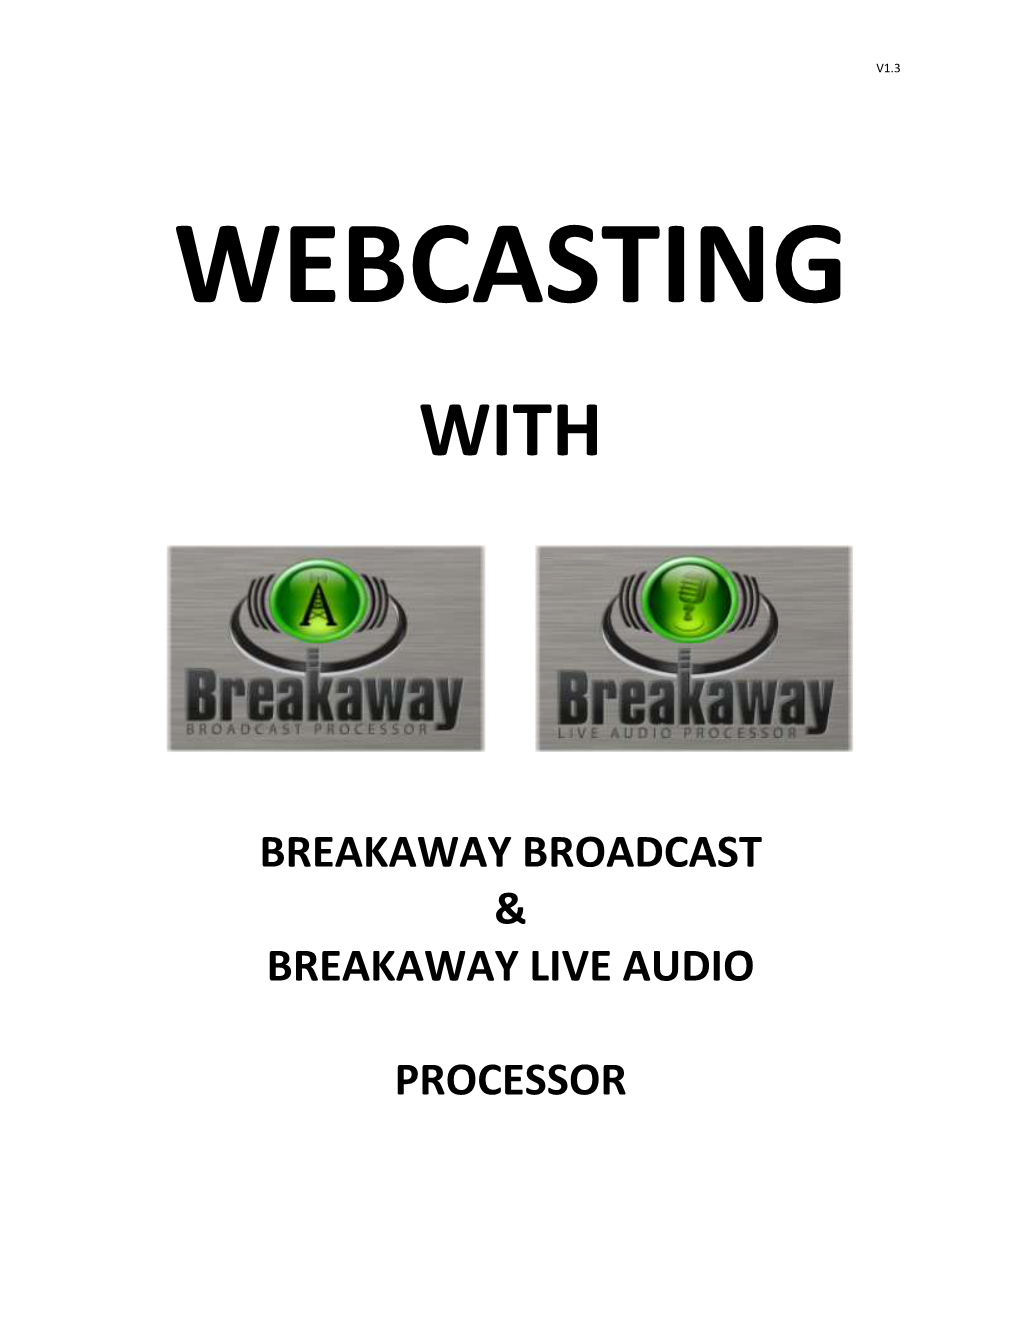 Webcasting with Breakaway] V1